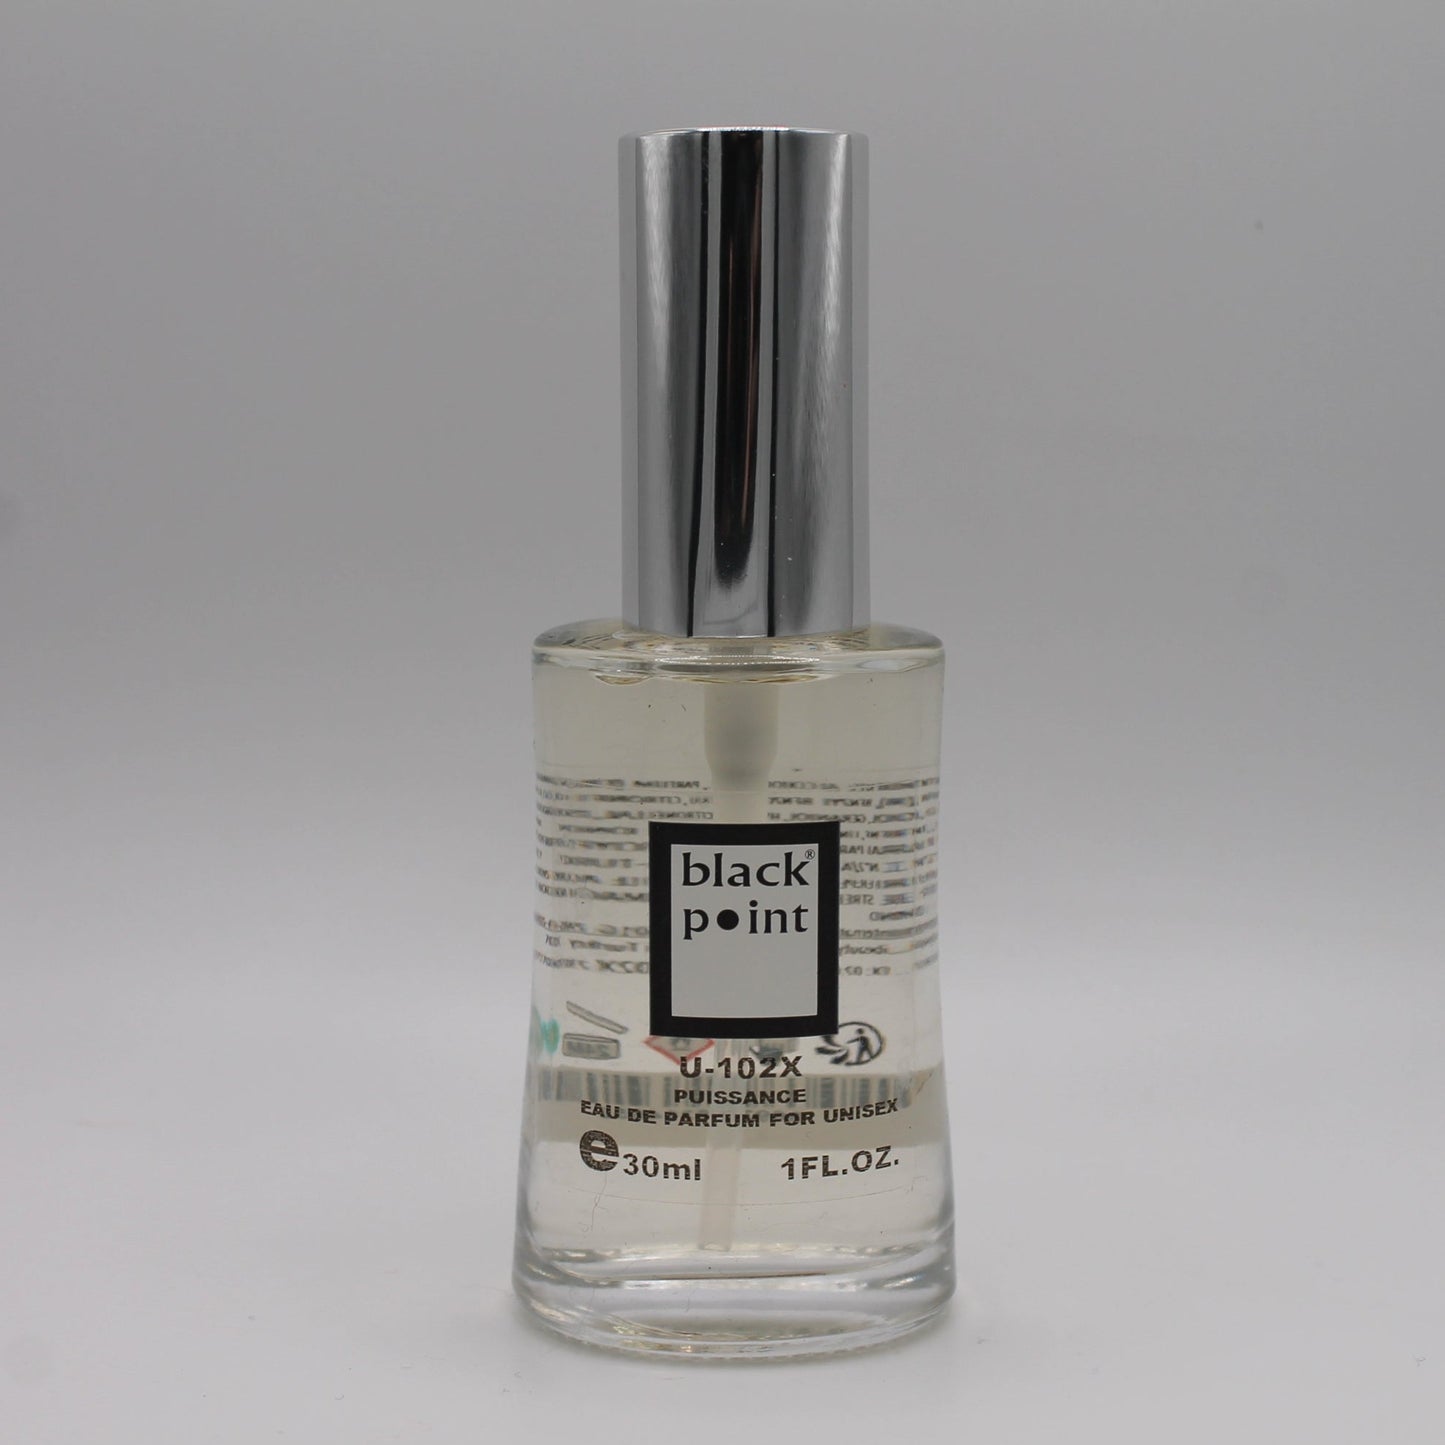 U-102X Unisex Black Point Perfumes 30ml